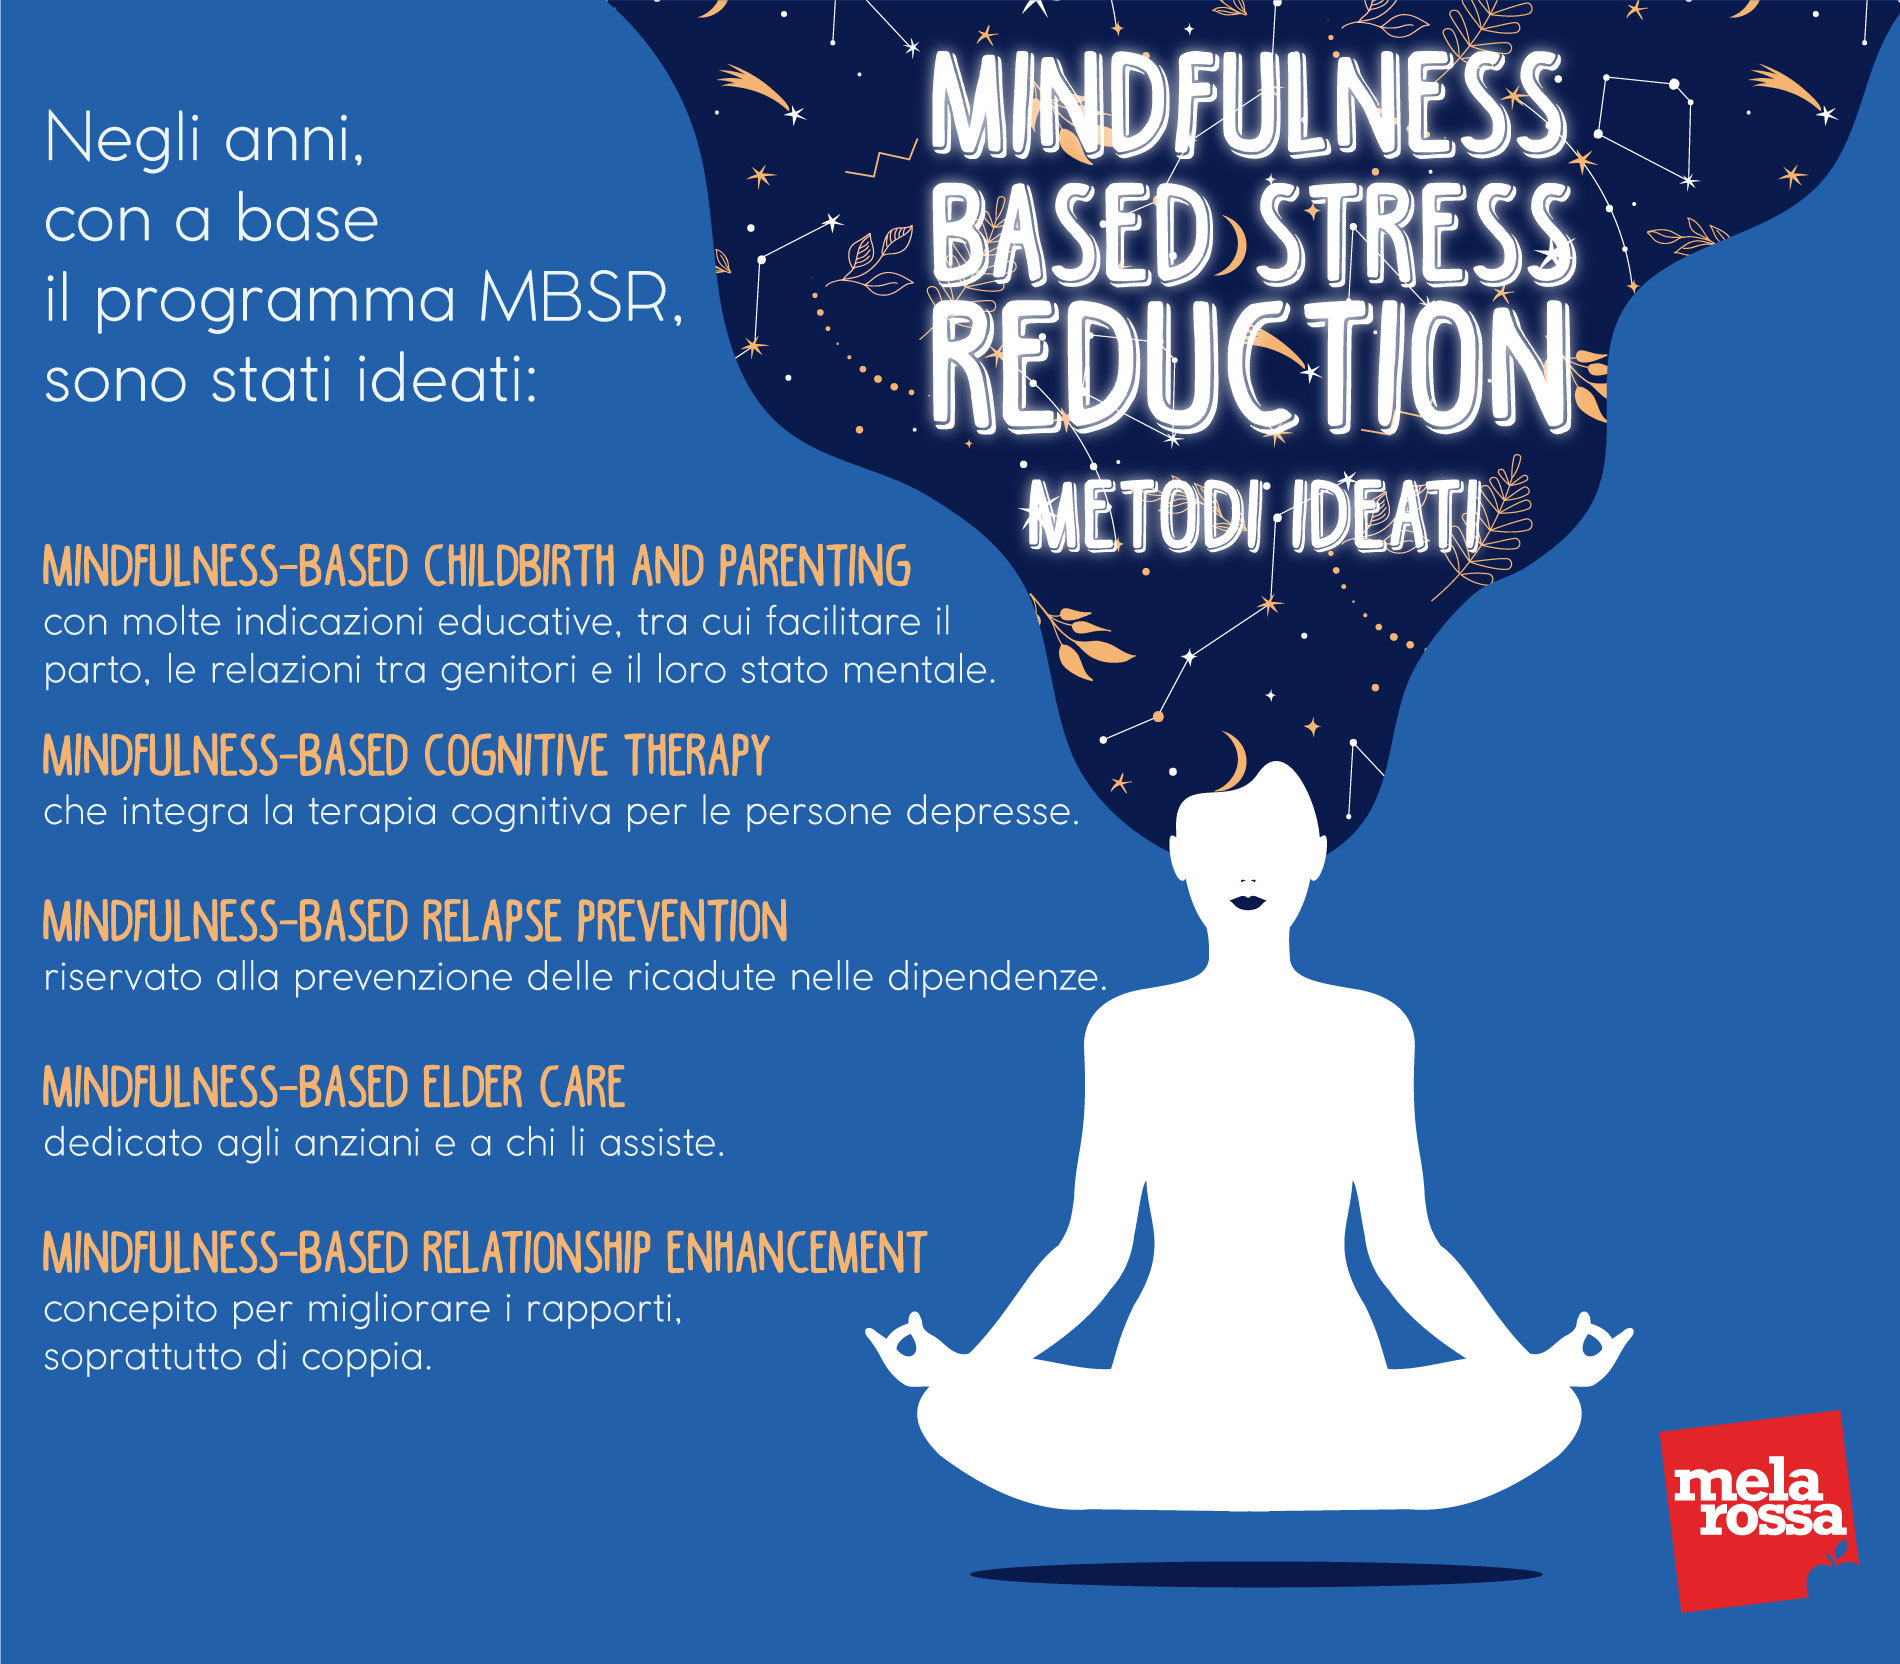 mindfulness: metodi ideati